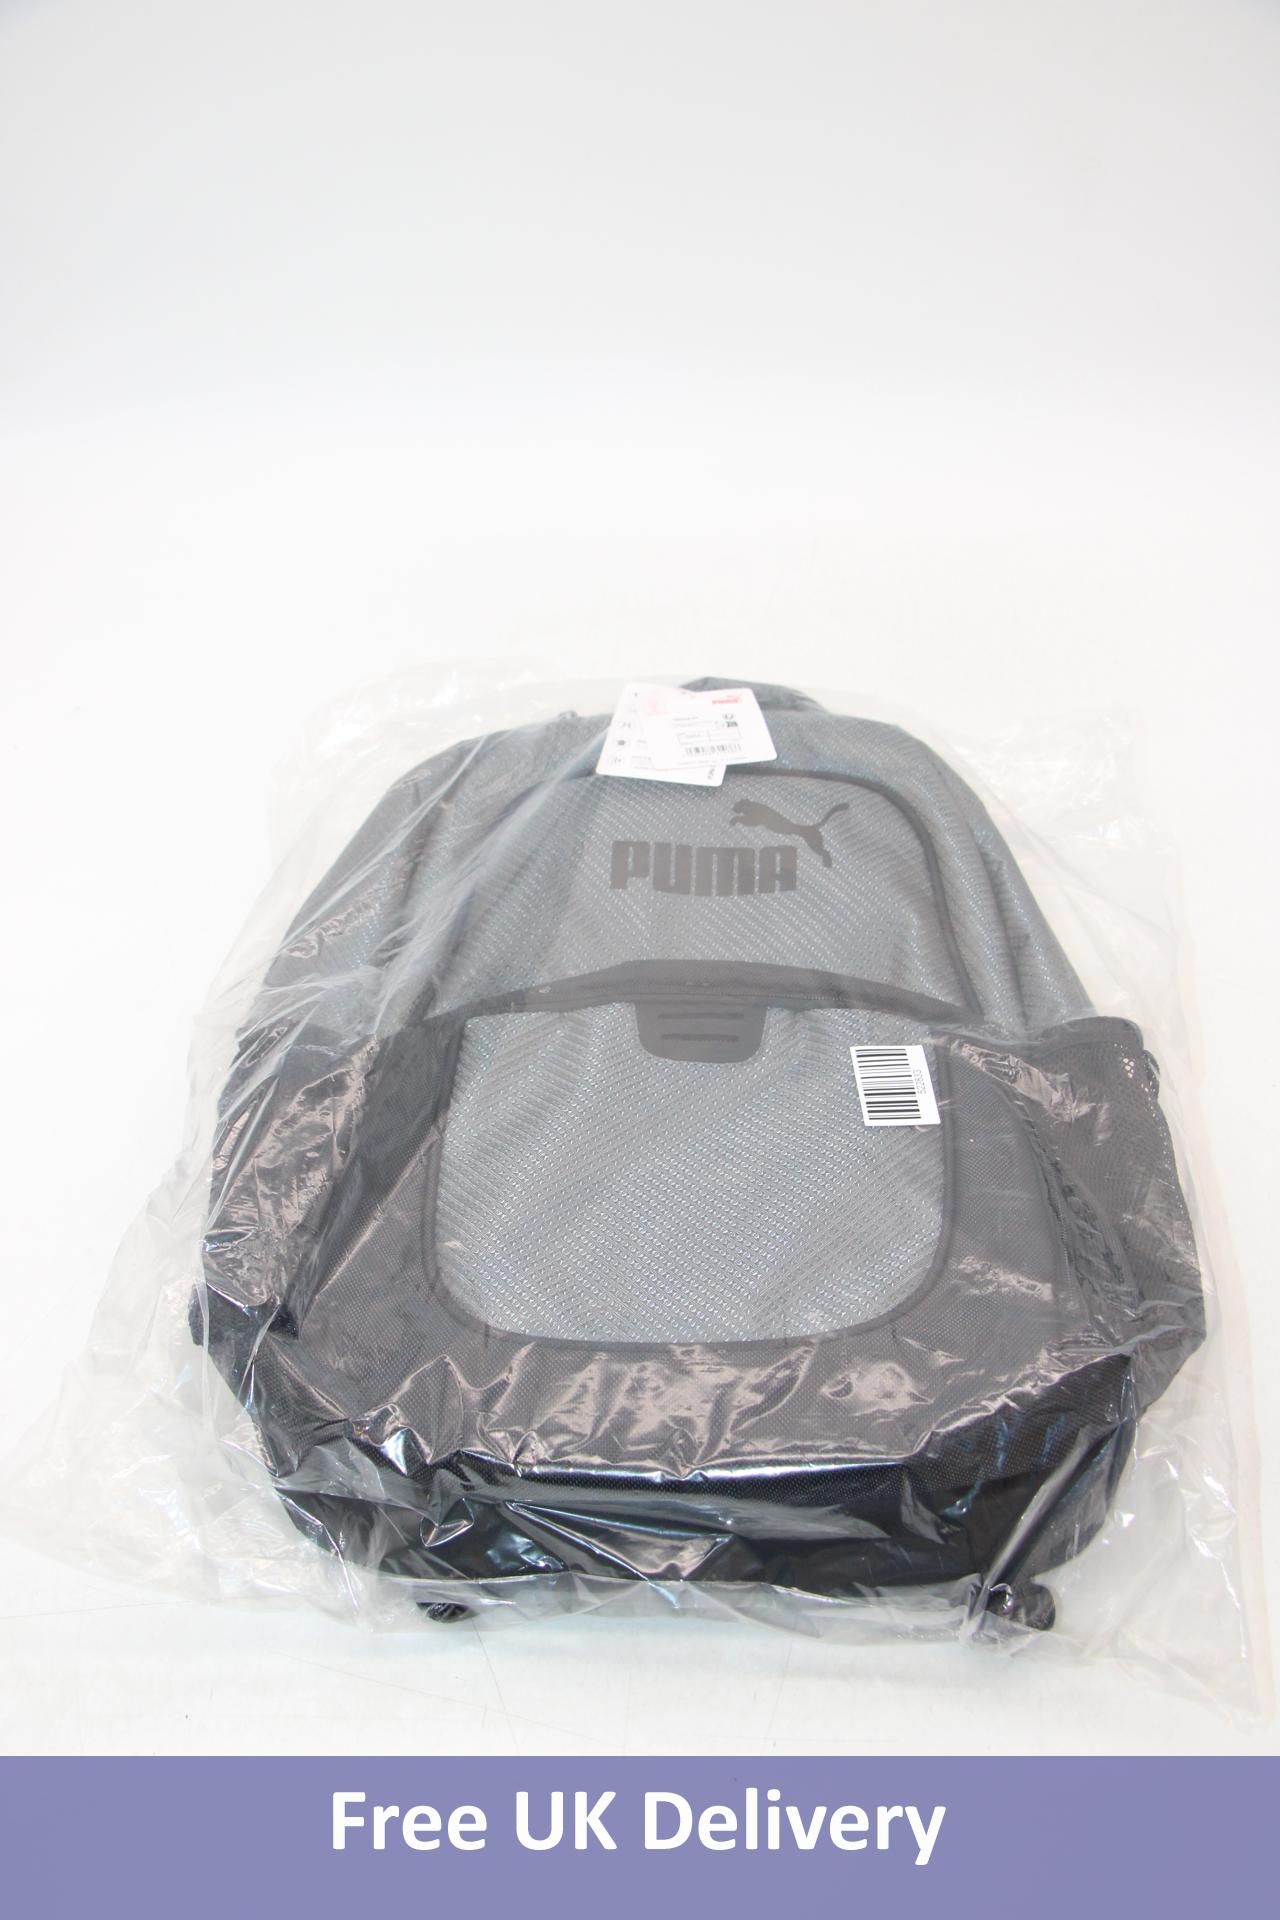 Puma Challenger Fully Padded, 15” Laptop Pocket Backpack, Dark Grey, One Size